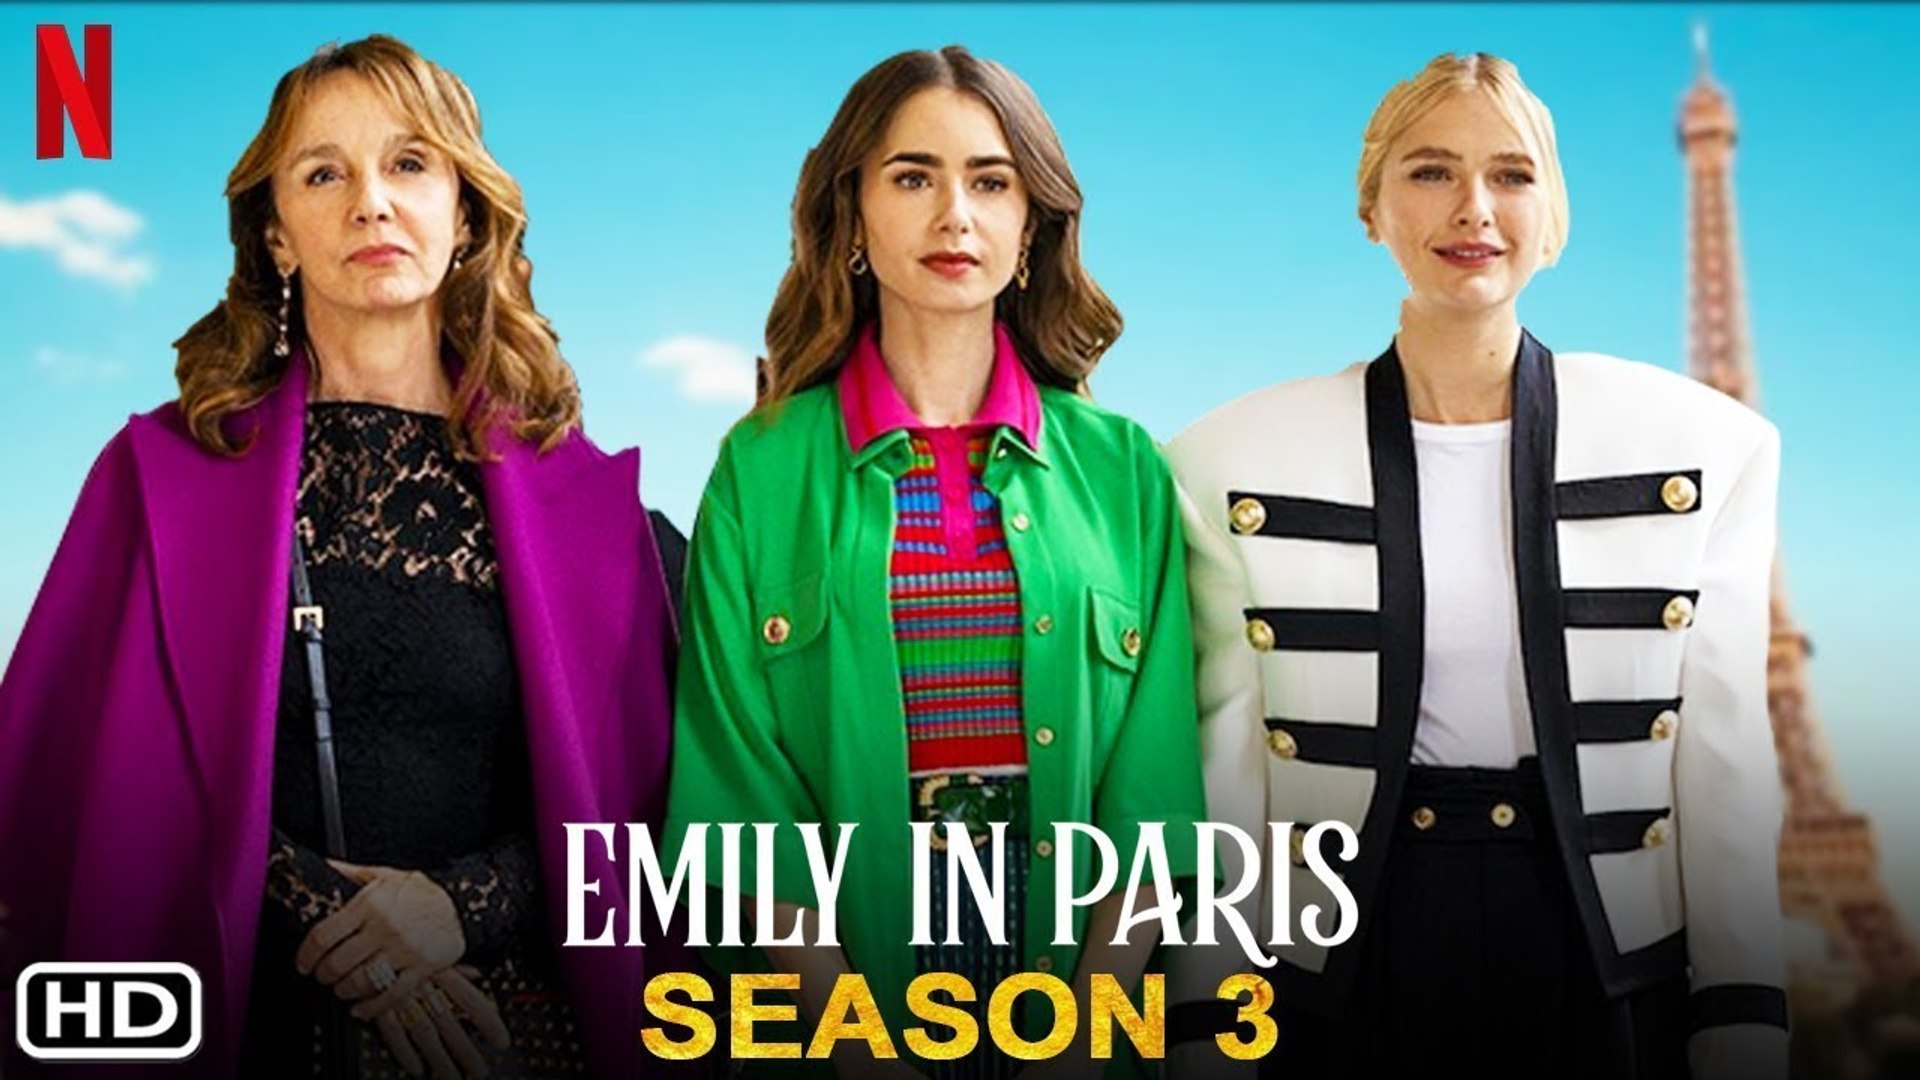 Emily in Paris season 2: Release date, cast, plot, and trailer